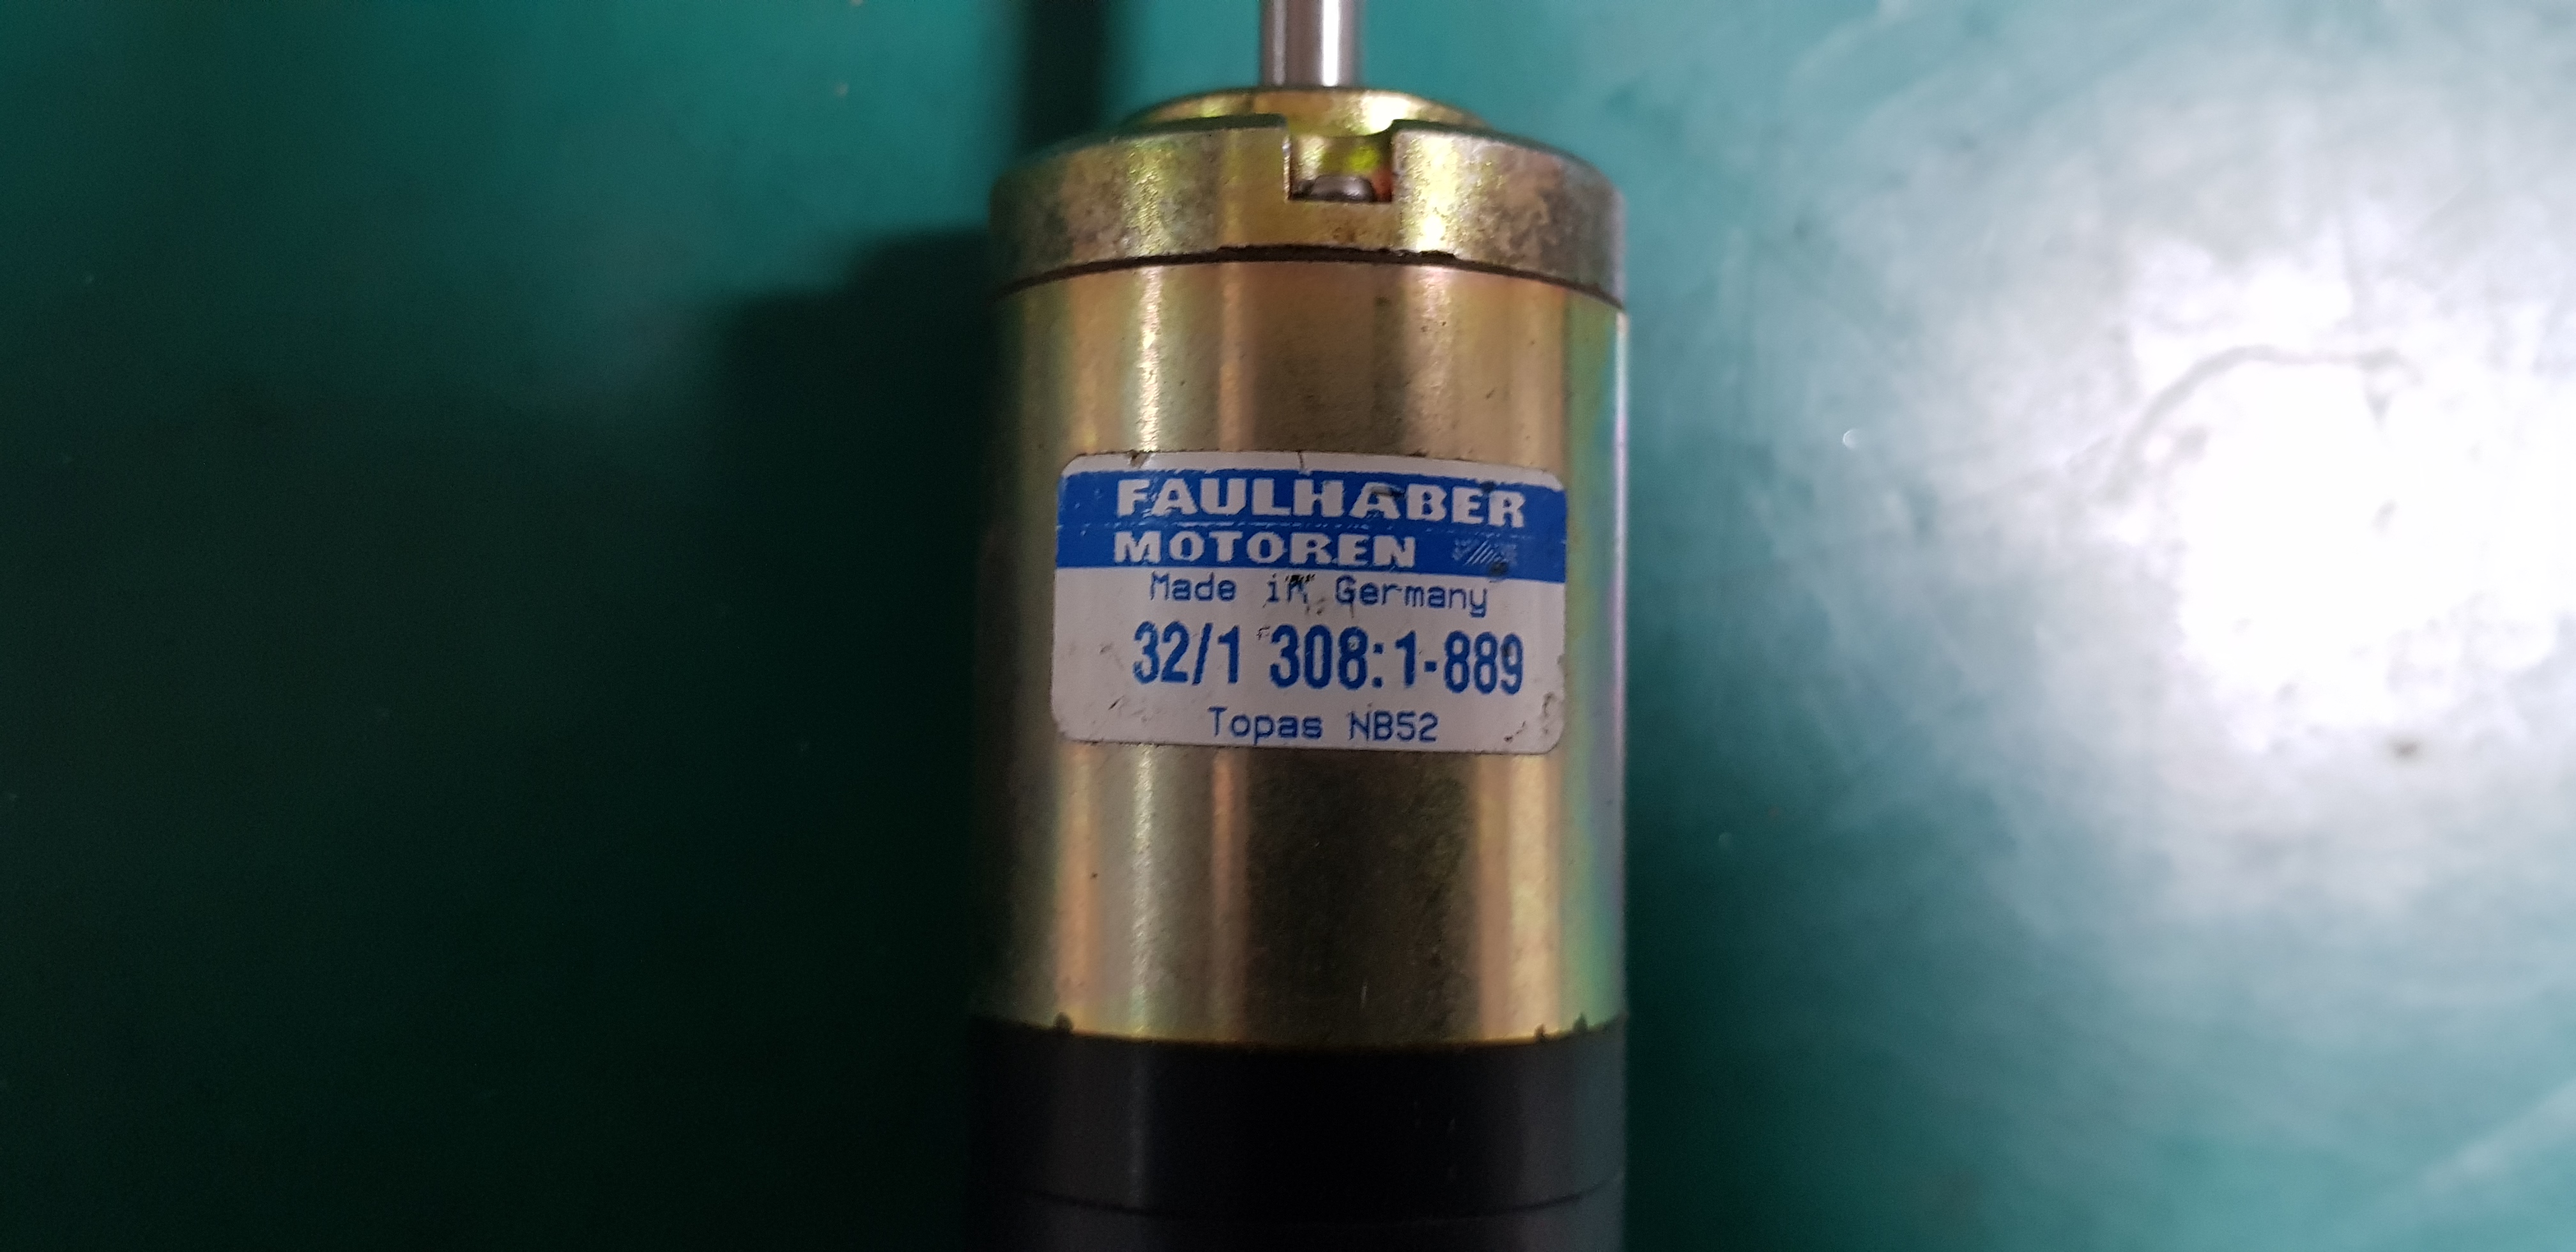 FAULaber motoren 3557k024c 32/1 308:1-889 (미사용품)